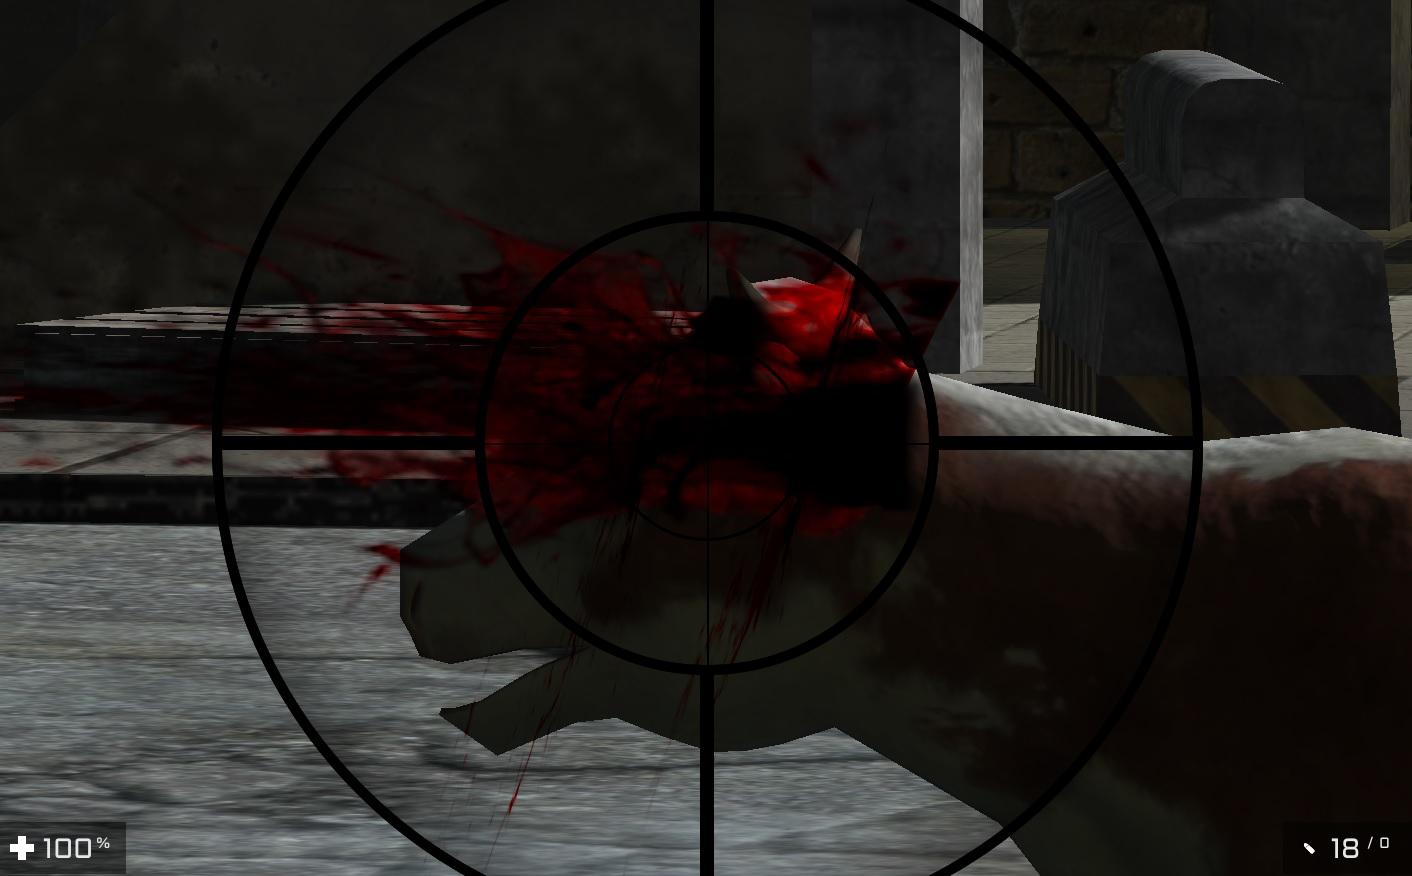 Screenshot №6 from game Killer Elite – Time to Die